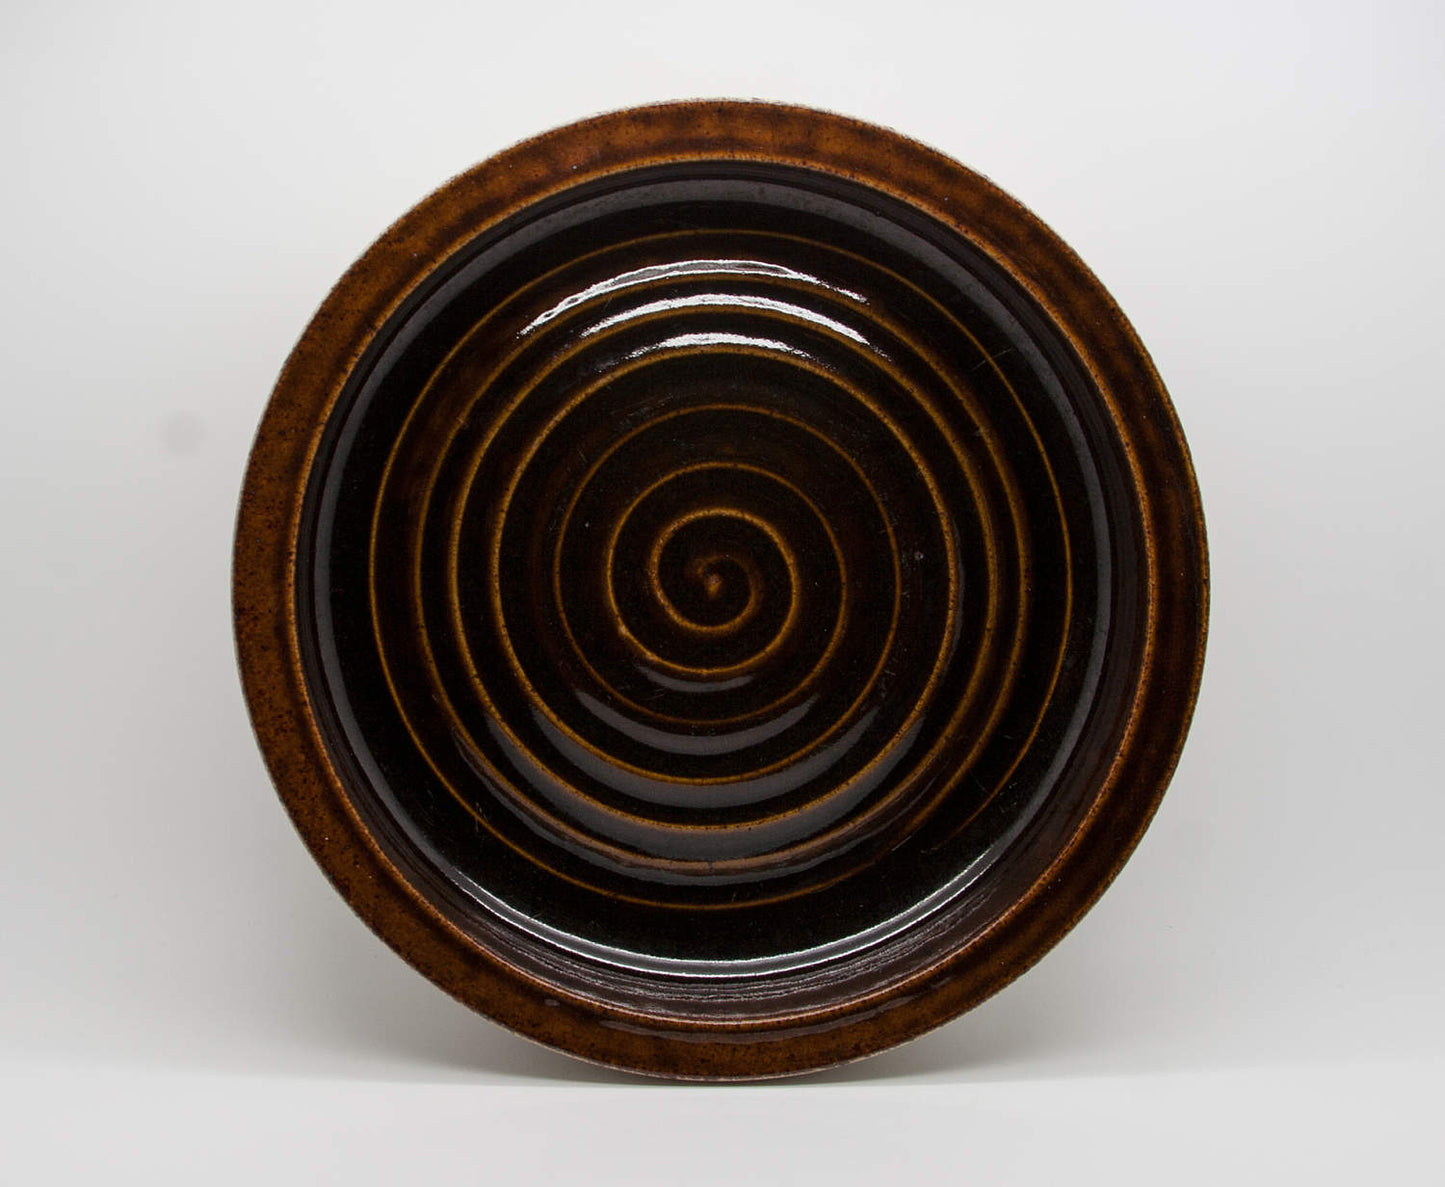 KNABSTRUP Brown Glazed Stoneware Bowl Mollaris.com 